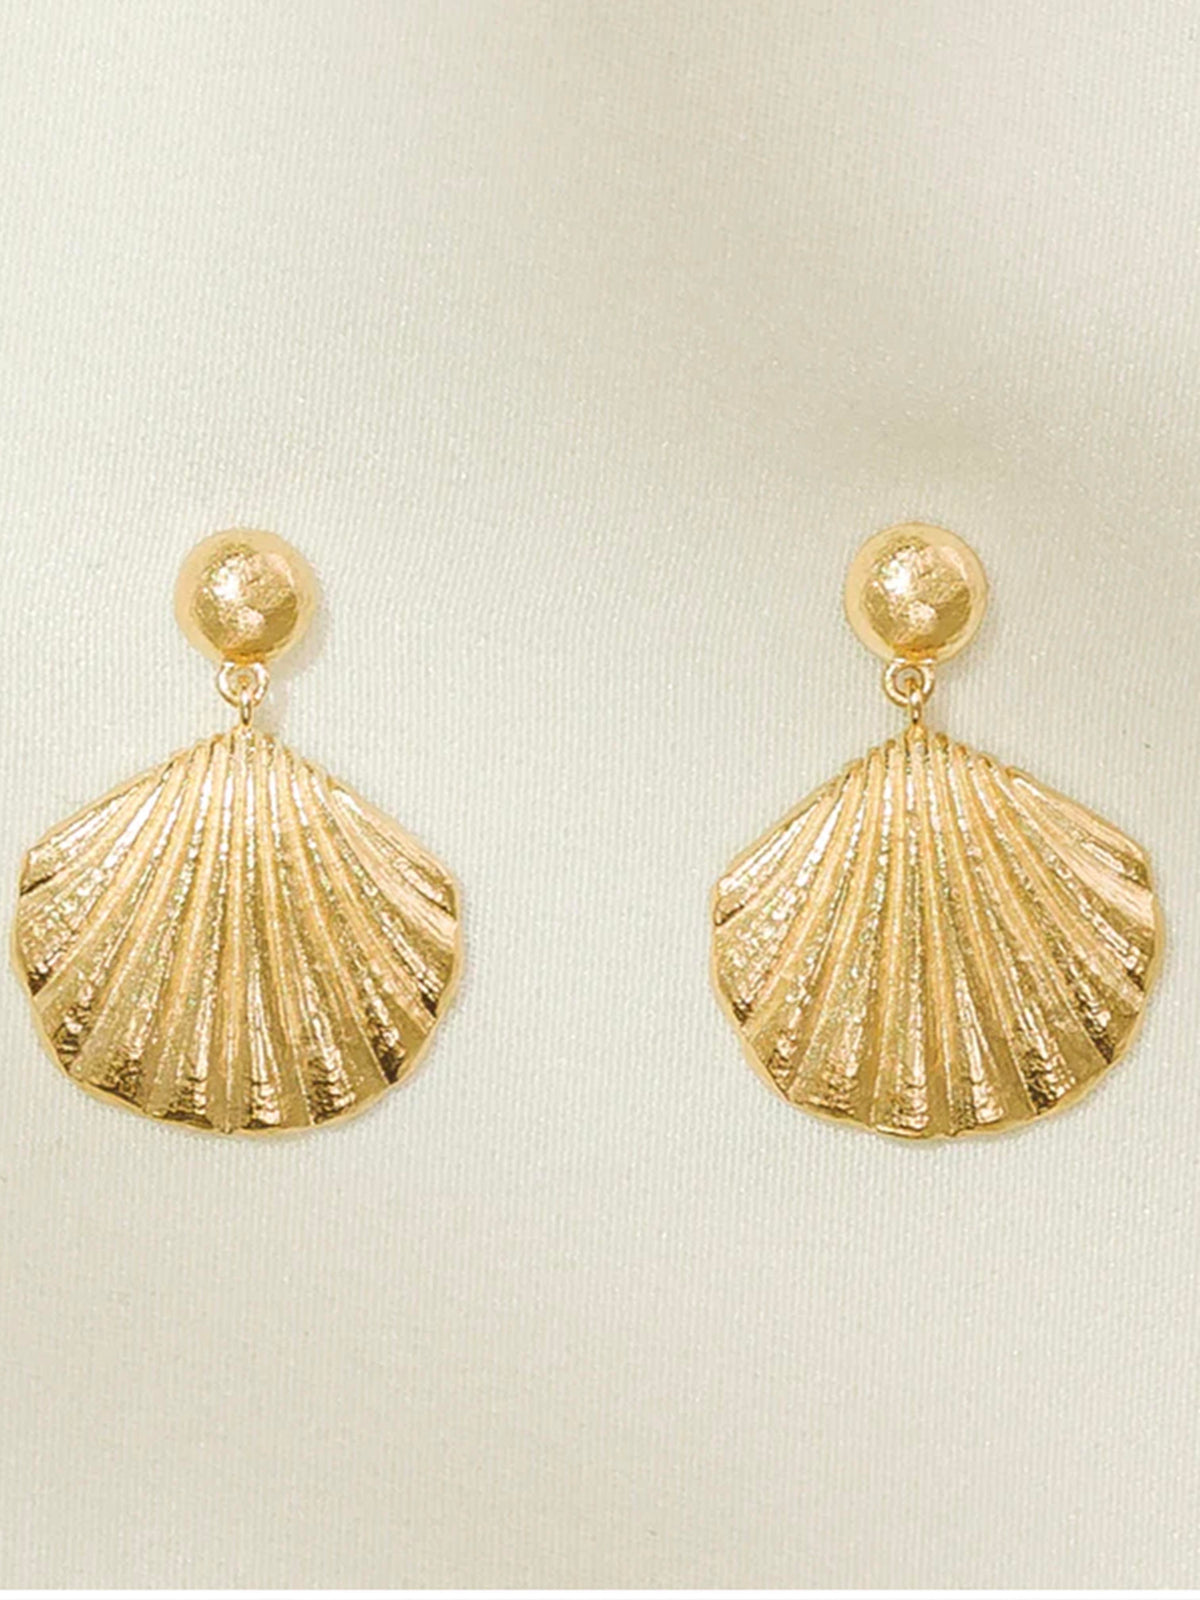 Venus Shell Earrings